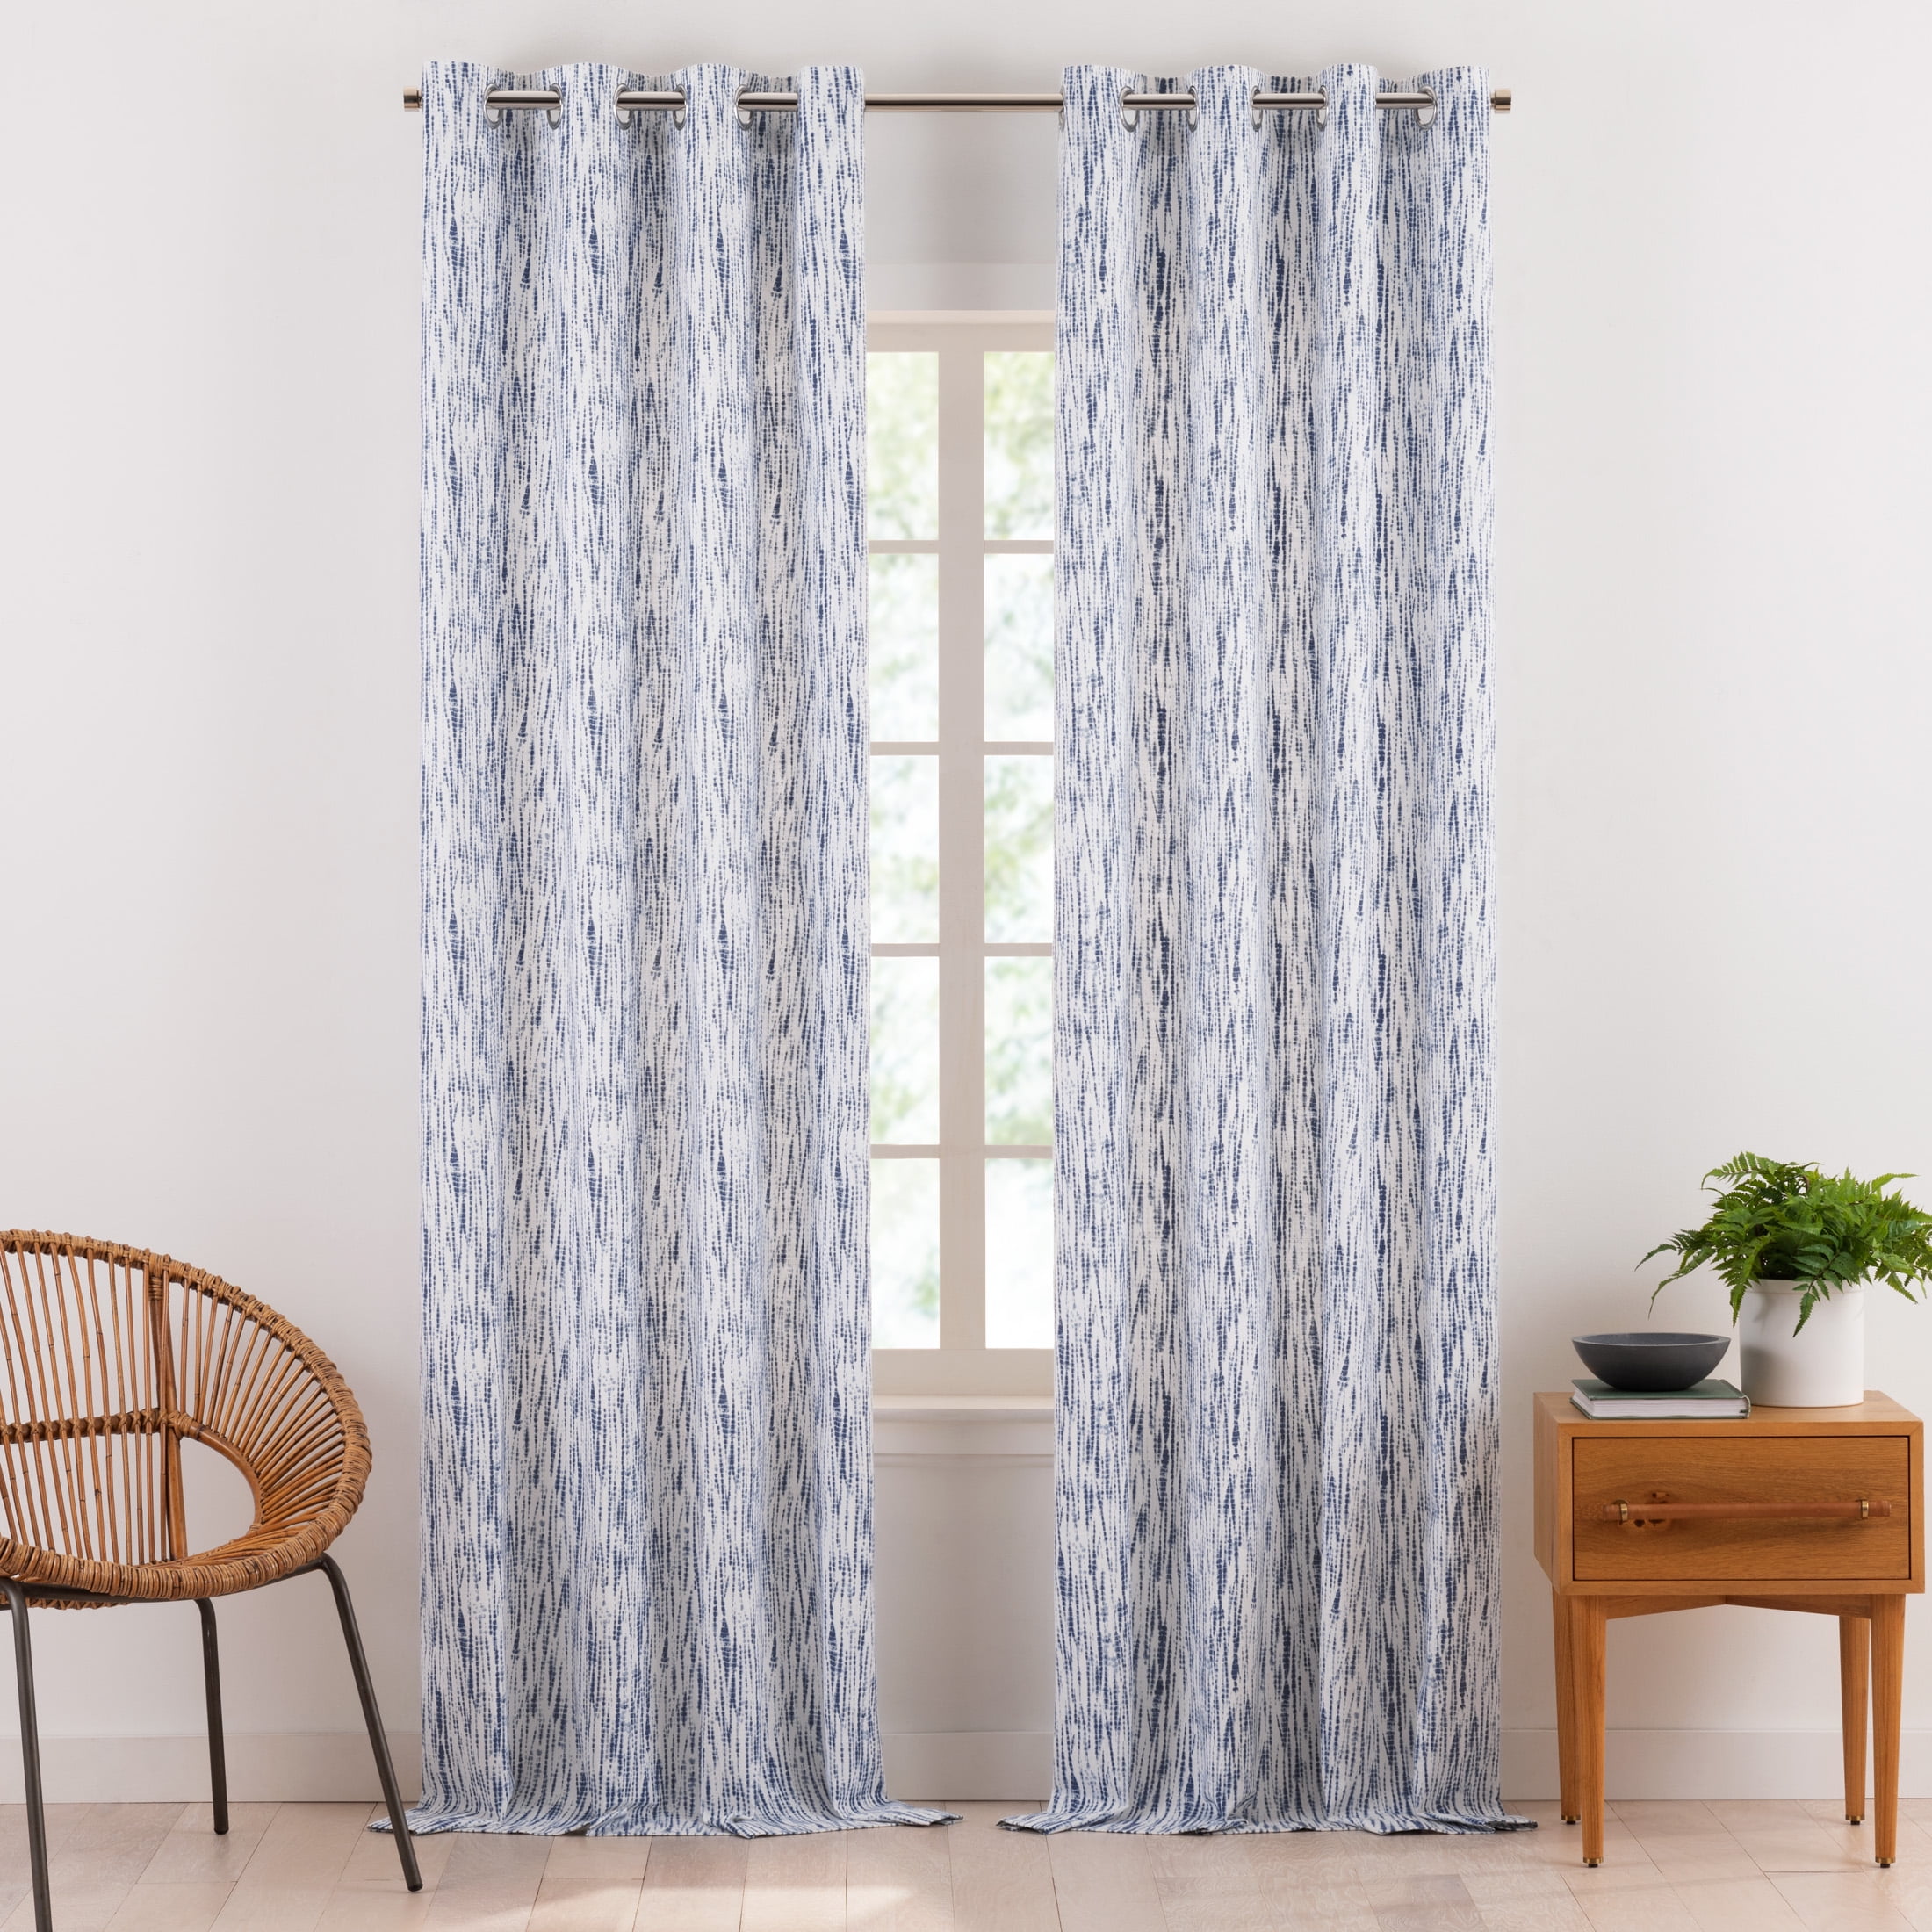 Details about   Indian Cotton Curtains Tie Dye Shibori Door Decor Window Curtains Pelmet Tab Top 